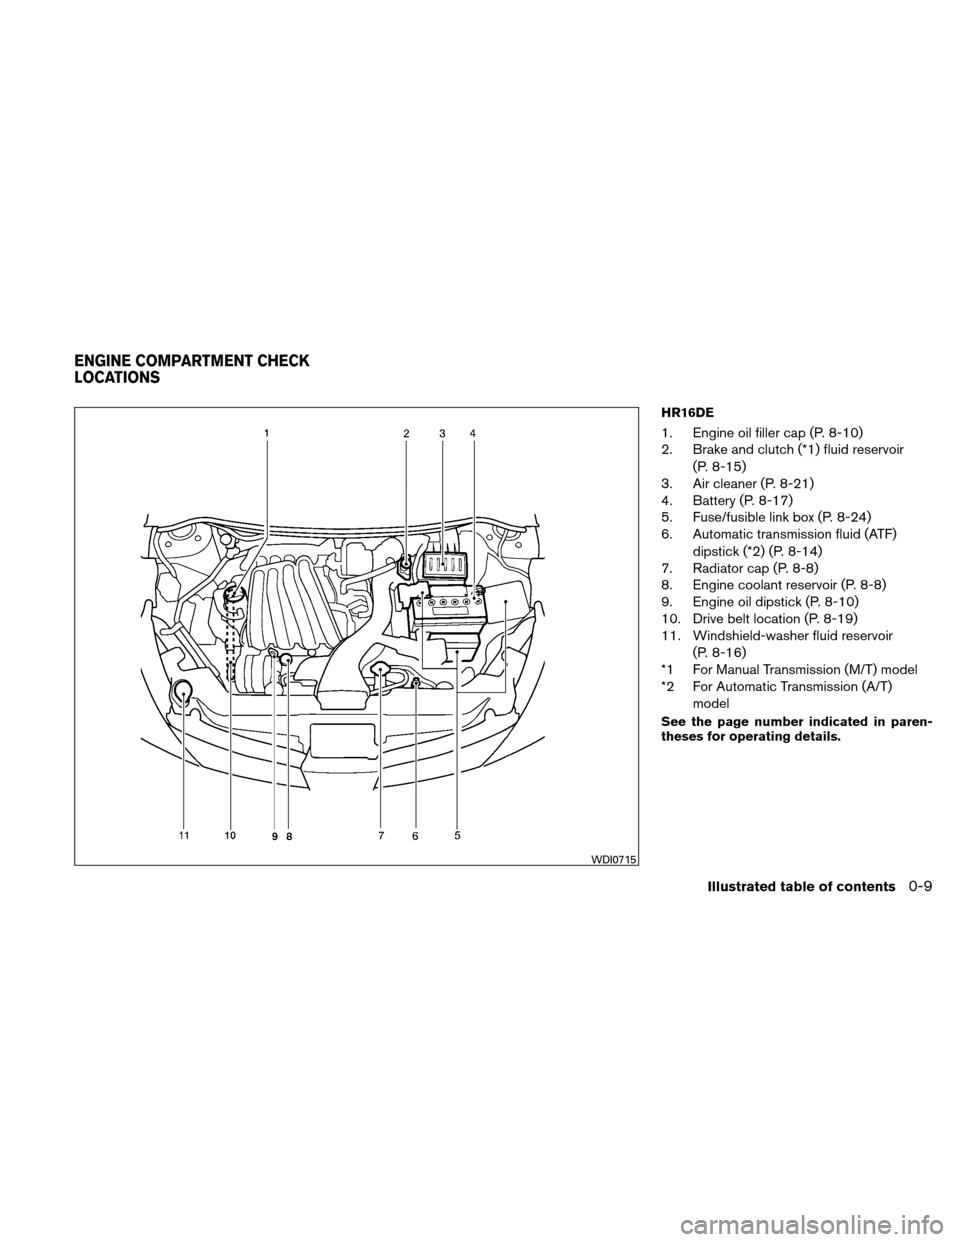 NISSAN VERSA HATCHBACK 2011 1.G User Guide HR16DE
1. Engine oil filler cap (P. 8-10)
2. Brake and clutch (*1) fluid reservoir(P. 8-15)
3. Air cleaner (P. 8-21)
4. Battery (P. 8-17)
5. Fuse/fusible link box (P. 8-24)
6. Automatic transmission f